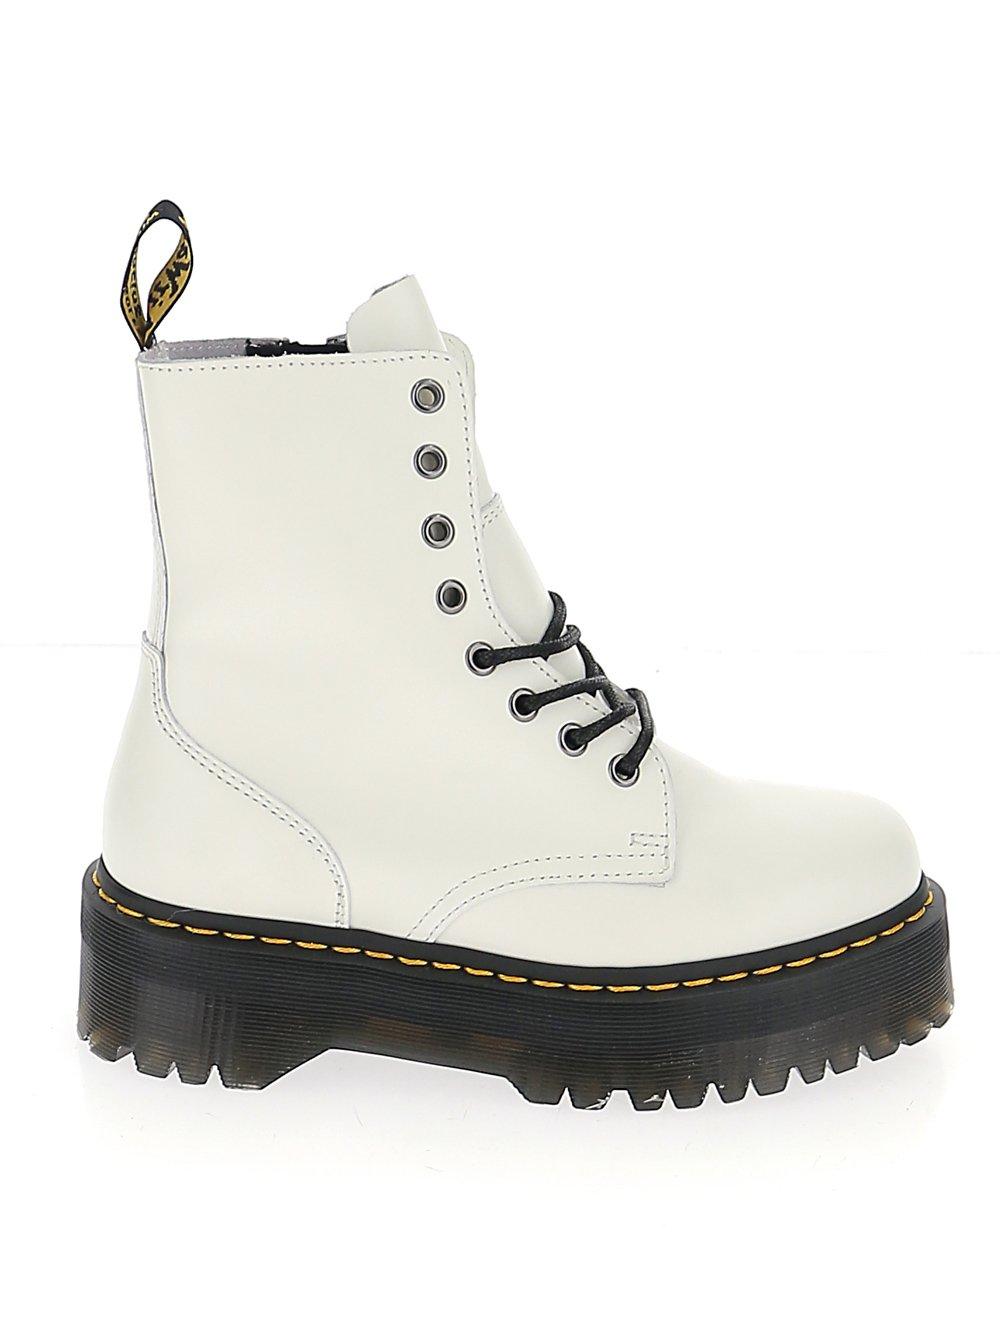 Dr. Martens Leather Jadon Max Platform Boots in White - Lyst